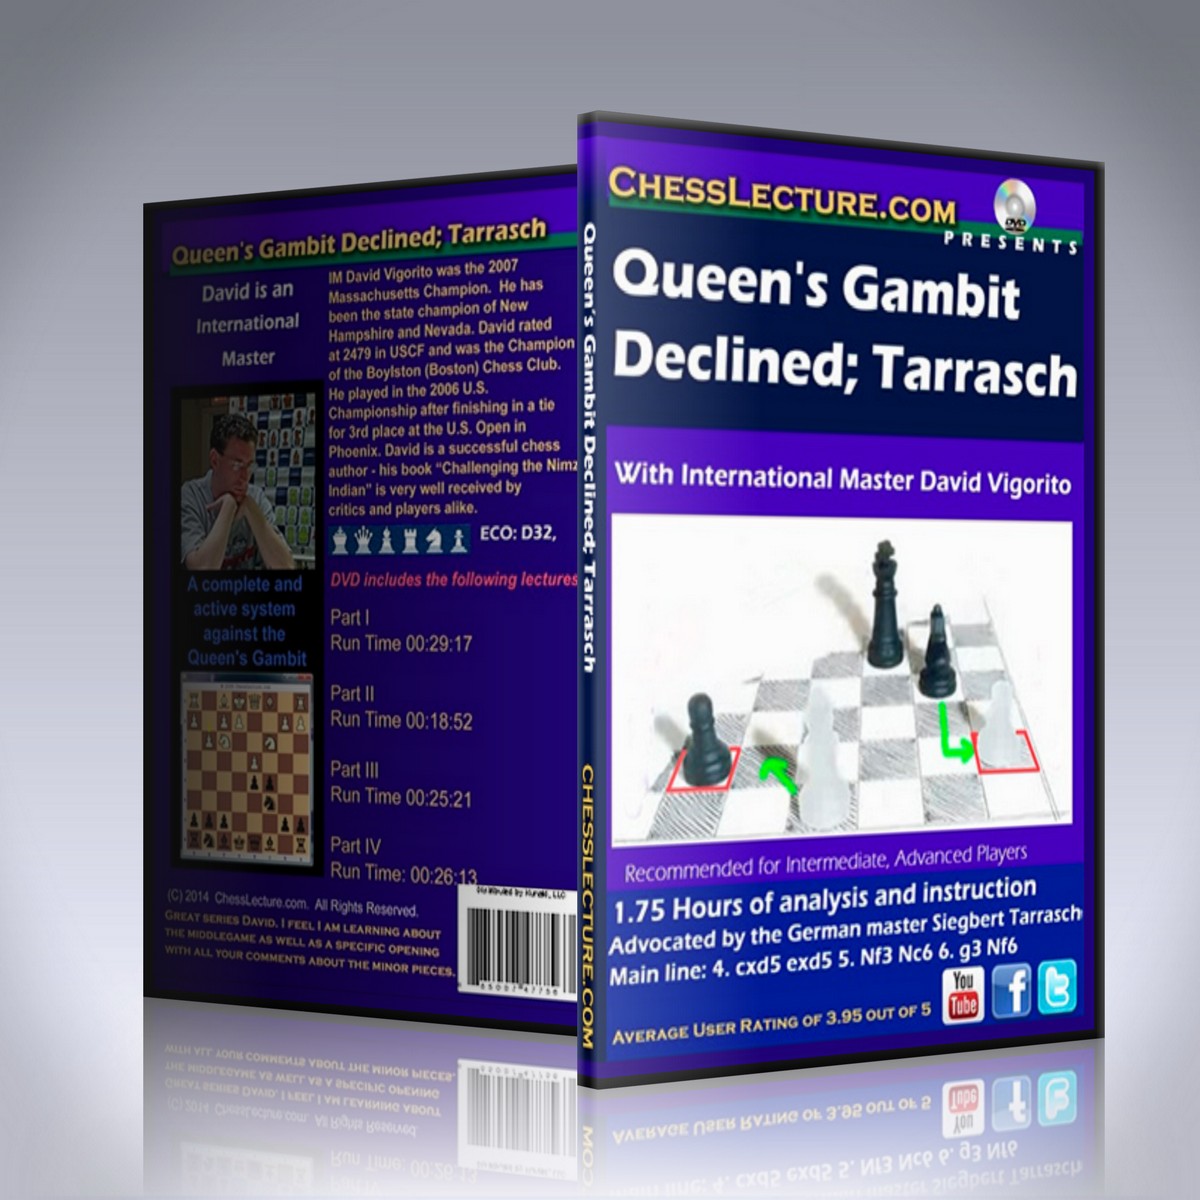 Queen’s Gambit Declined: Tarrasch – IM David Vigorito